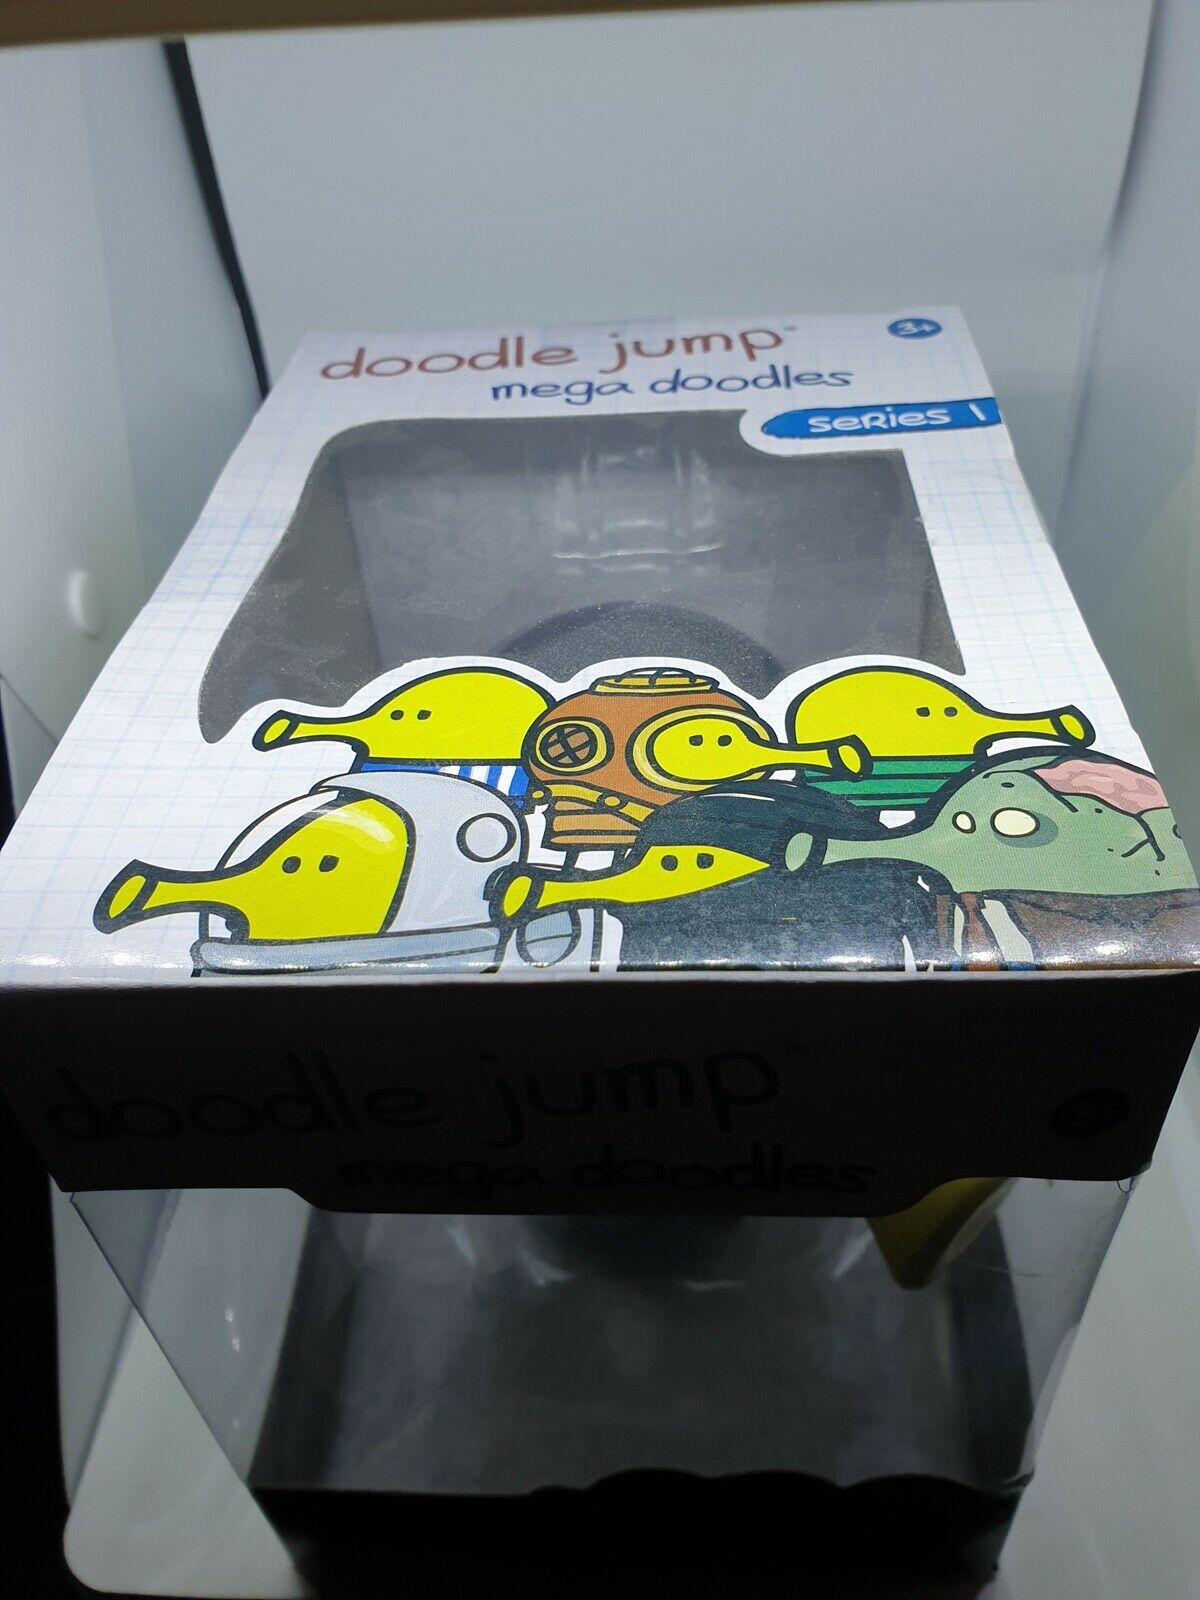 HS24970 - Doodle Jump Ninja - Mega Doodles - AXSE - The world of comic  figures